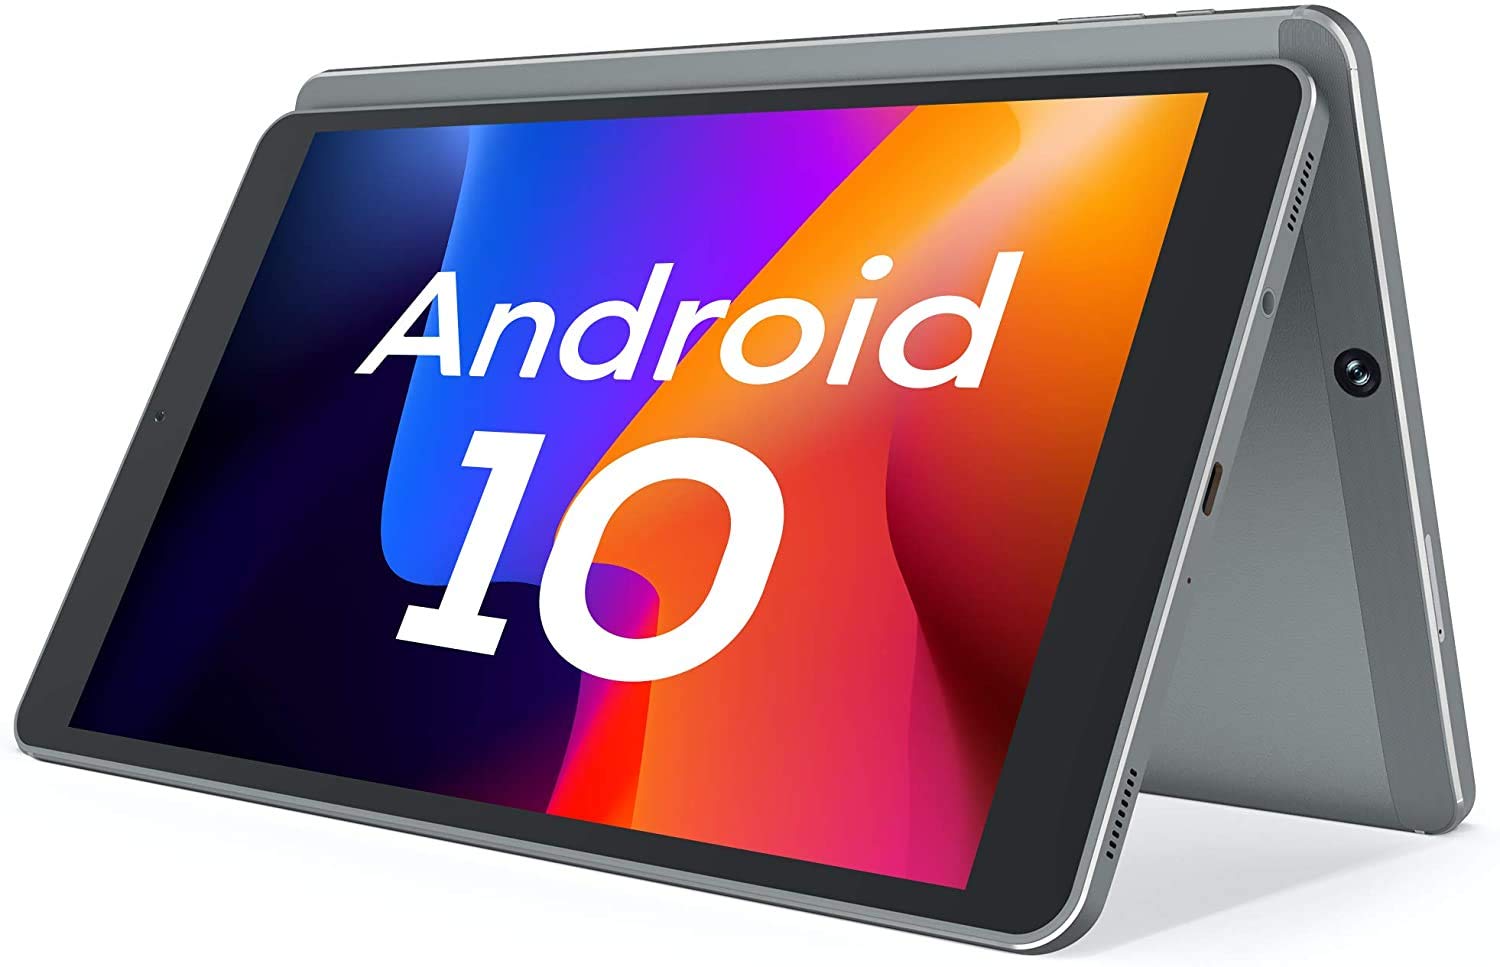 VASTKING Android 10.0 Tablet, Kingpad SA10 Octa-Core Processor, 3GB RAM, 32GB Storage, 10-inch, 1920x1200 IPS, 5G Wi-Fi, GPS, 13MP Camera, Bluetooth, Blue Light Filter Screen, Silver Grey